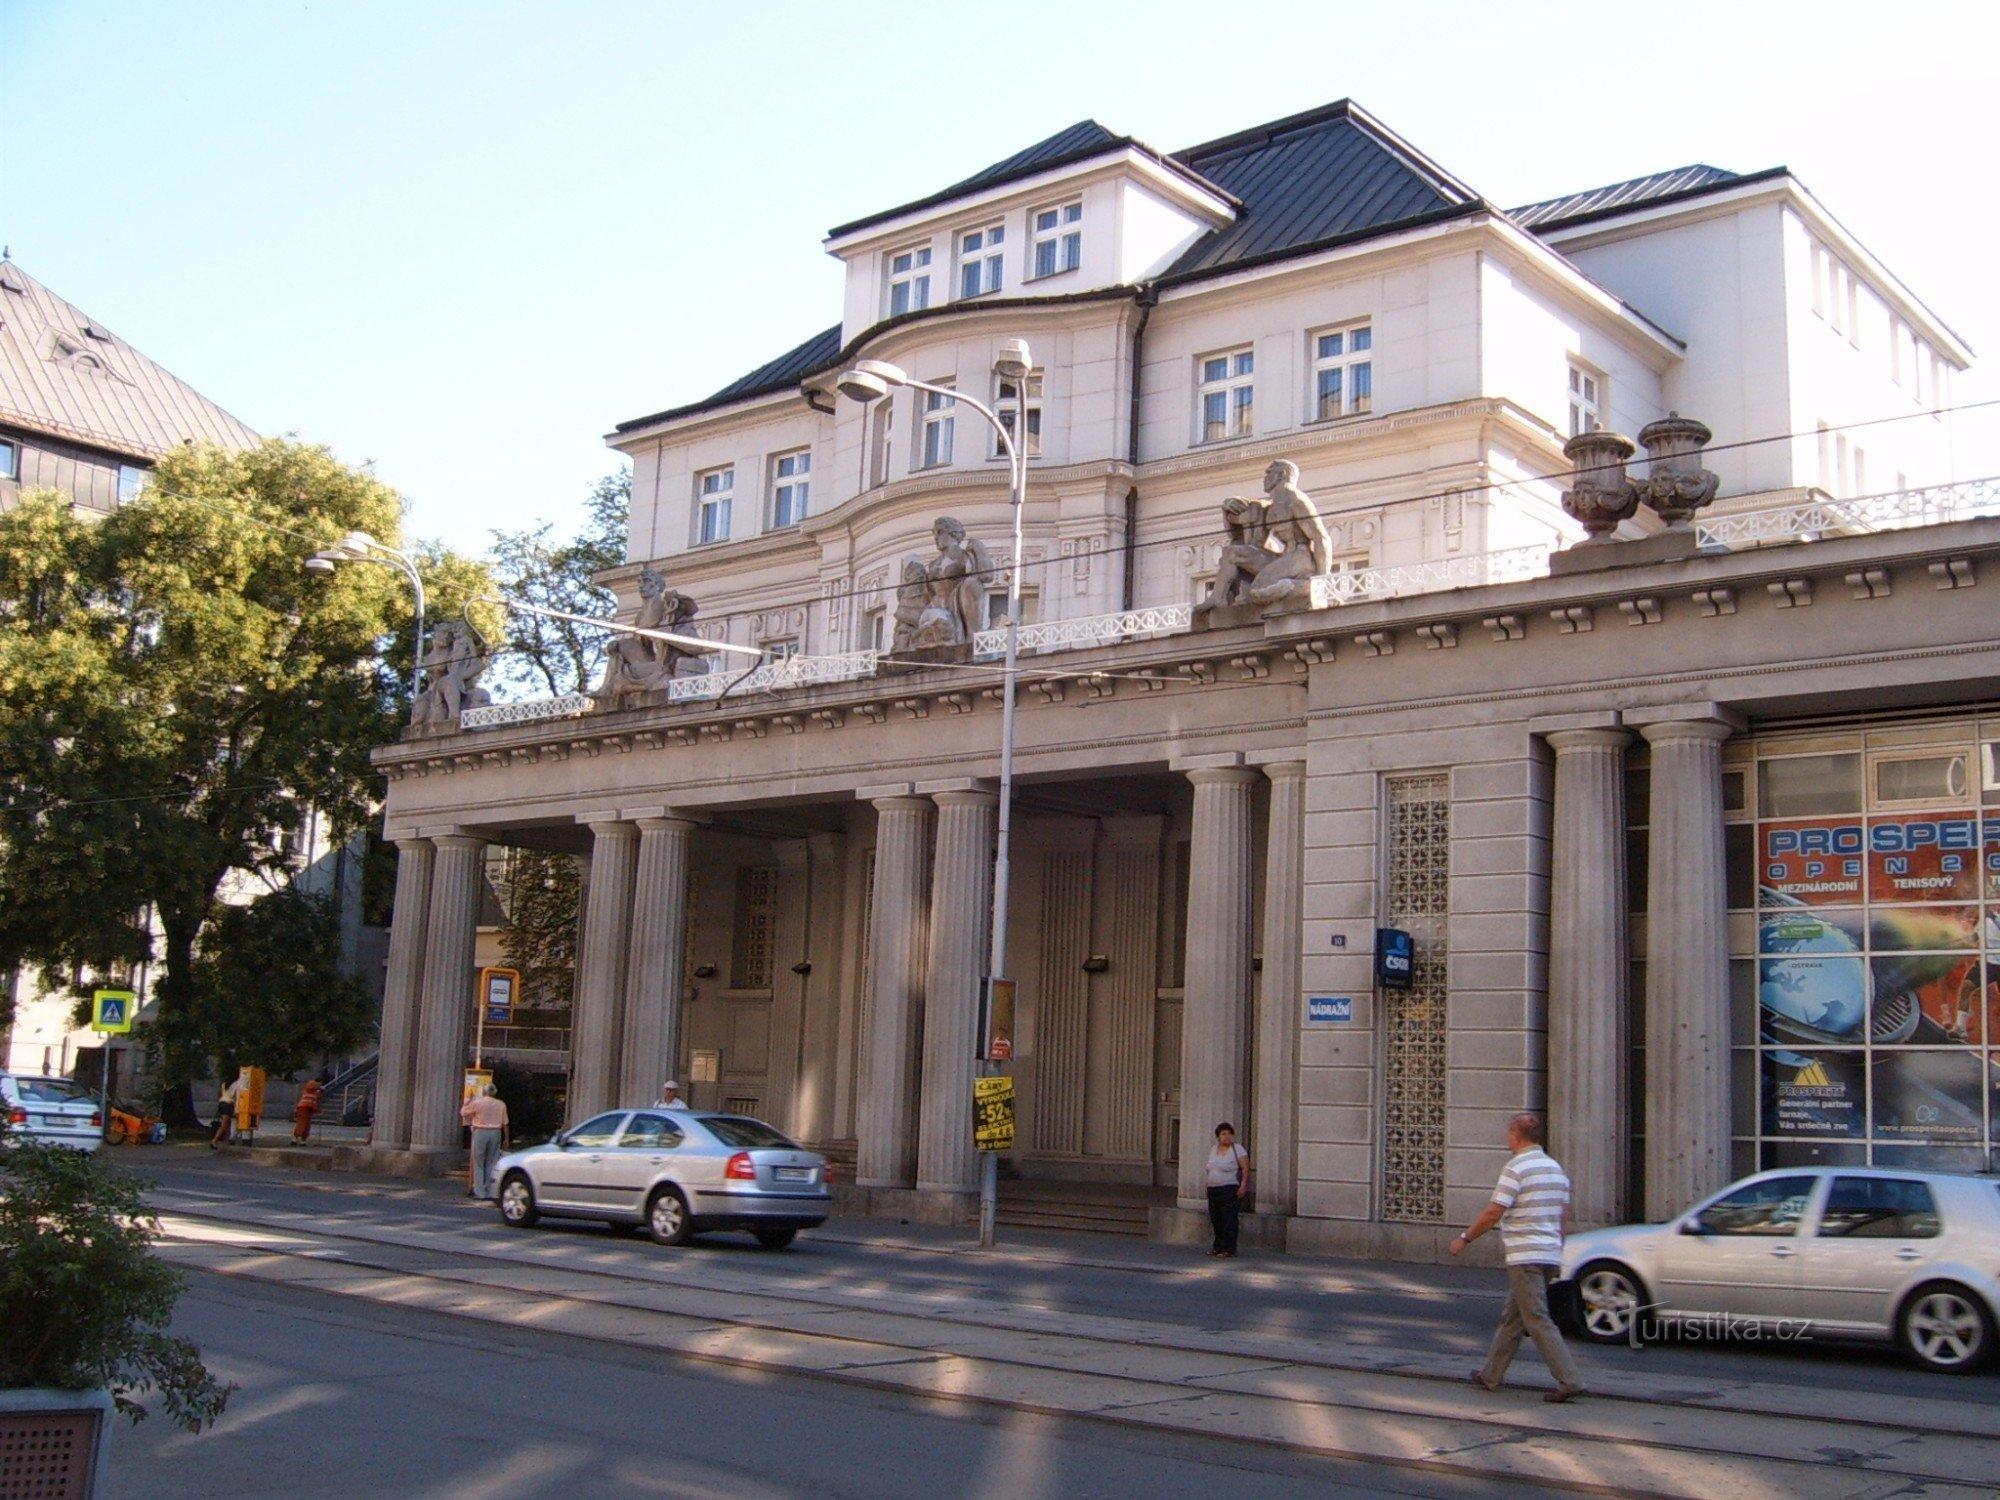 Ostrava - Kraus' villa - former Union bank